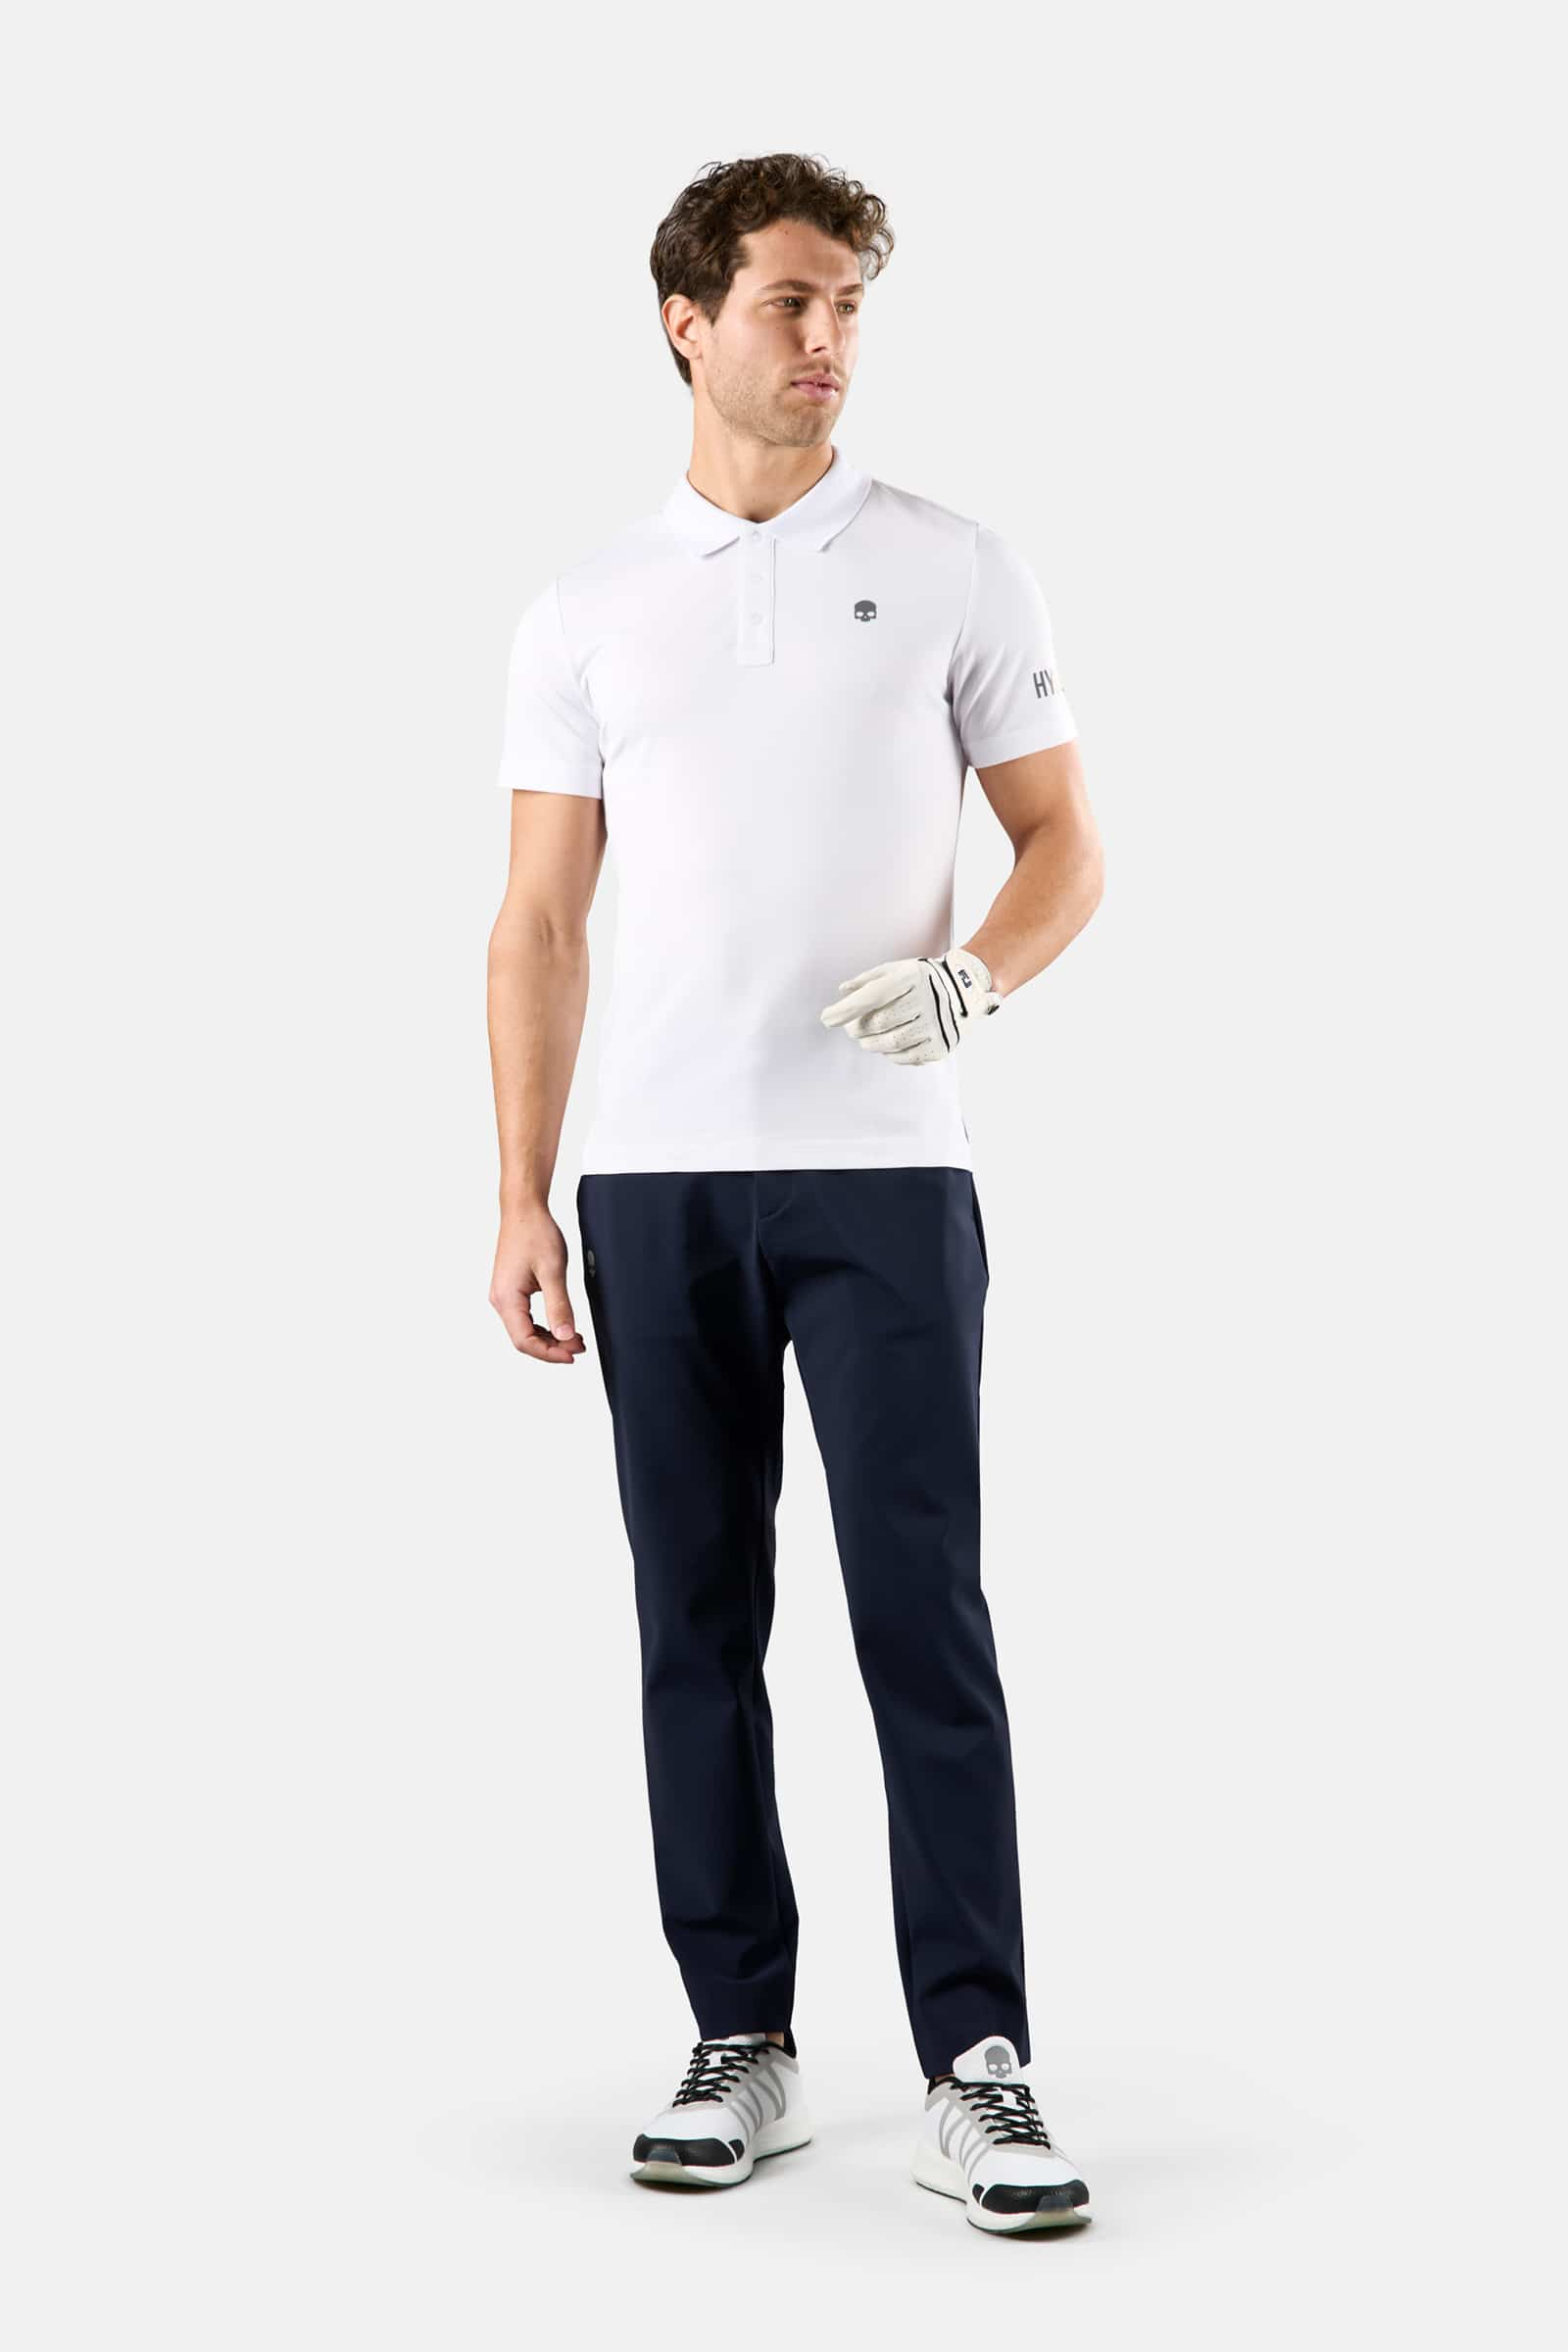 GOLF PIQUET POLO - WHITE - Hydrogen - Luxury Sportwear